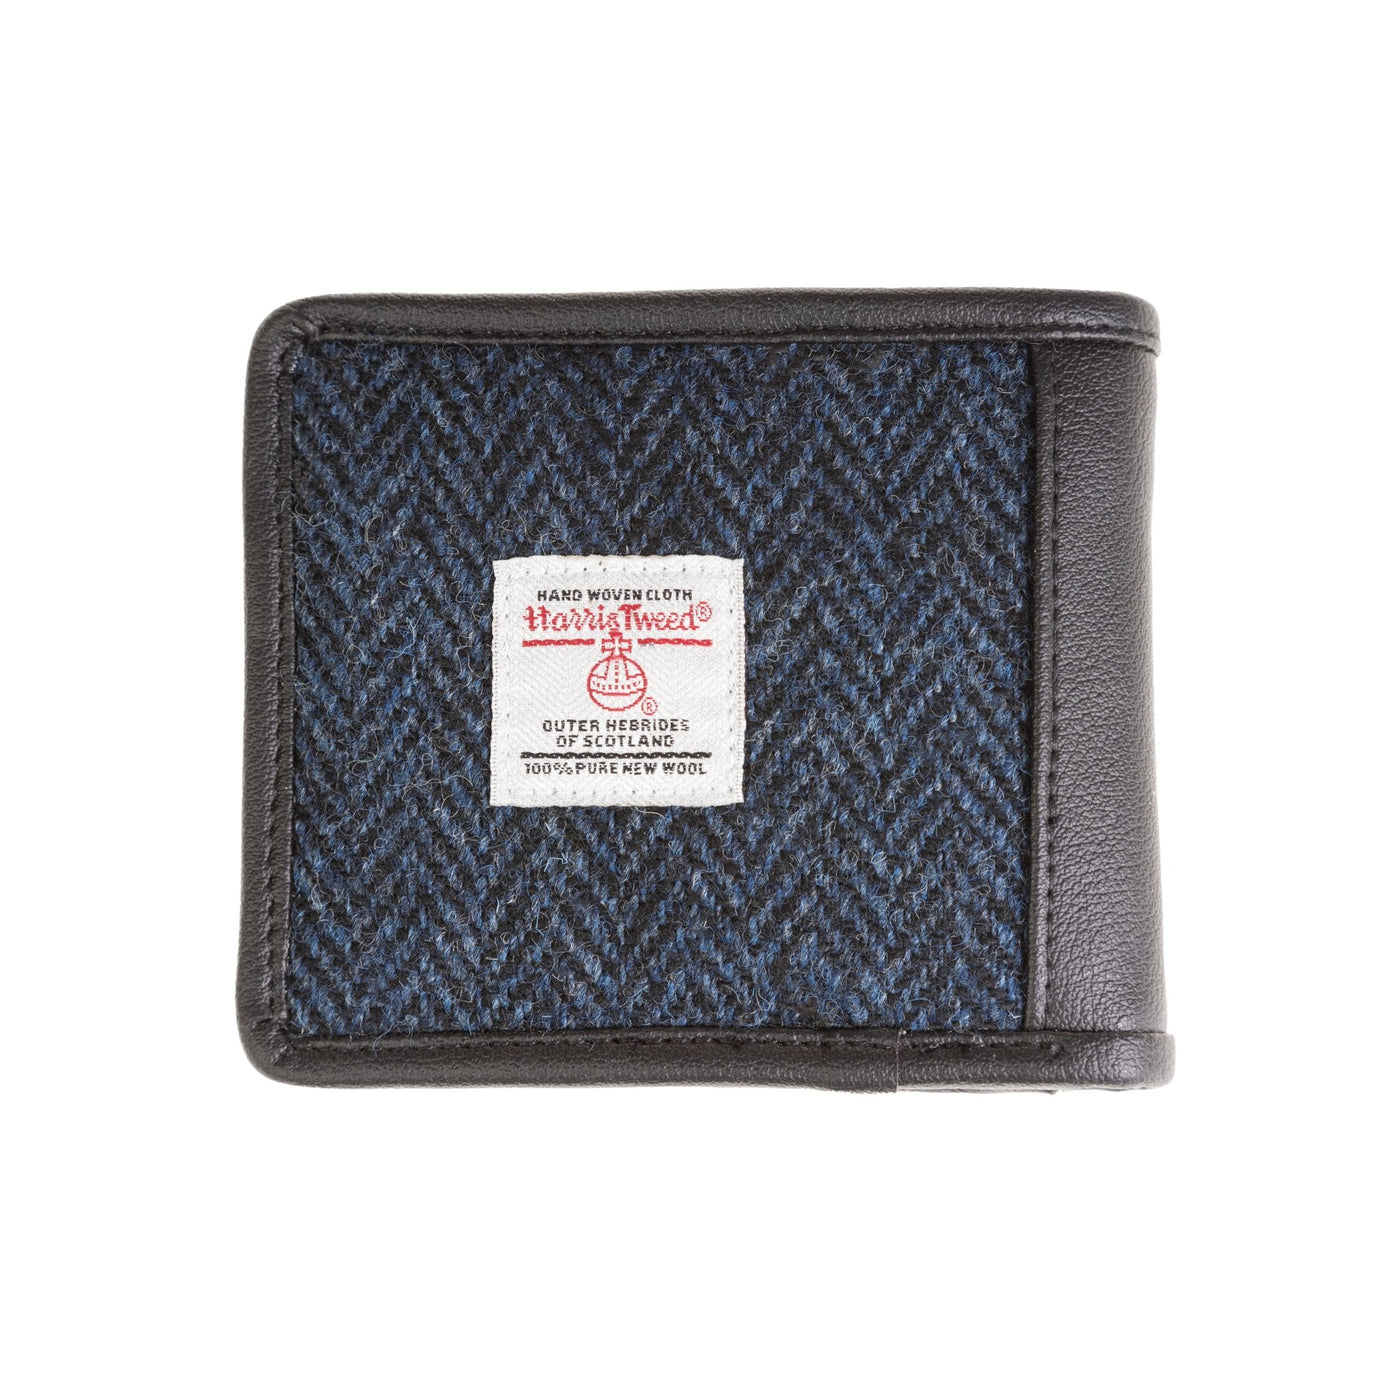 Mens Ht Vegan Leather Wallet Navy Blue Herringbone / Black - Dunedin Cashmere